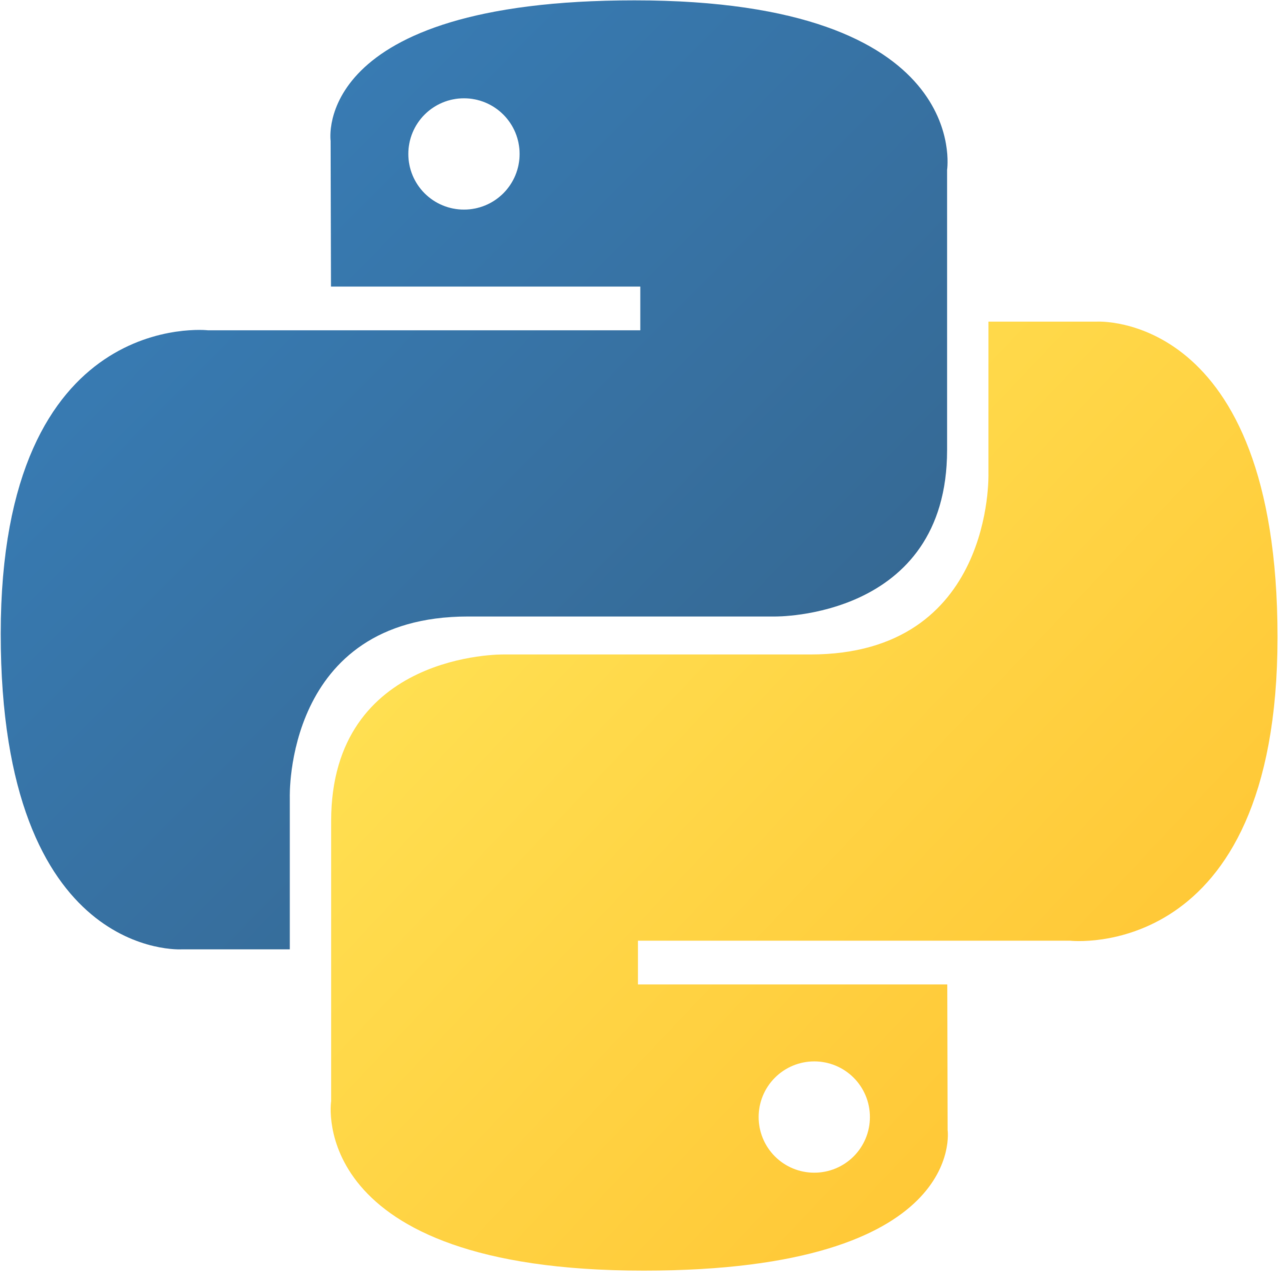 Python3 Installation